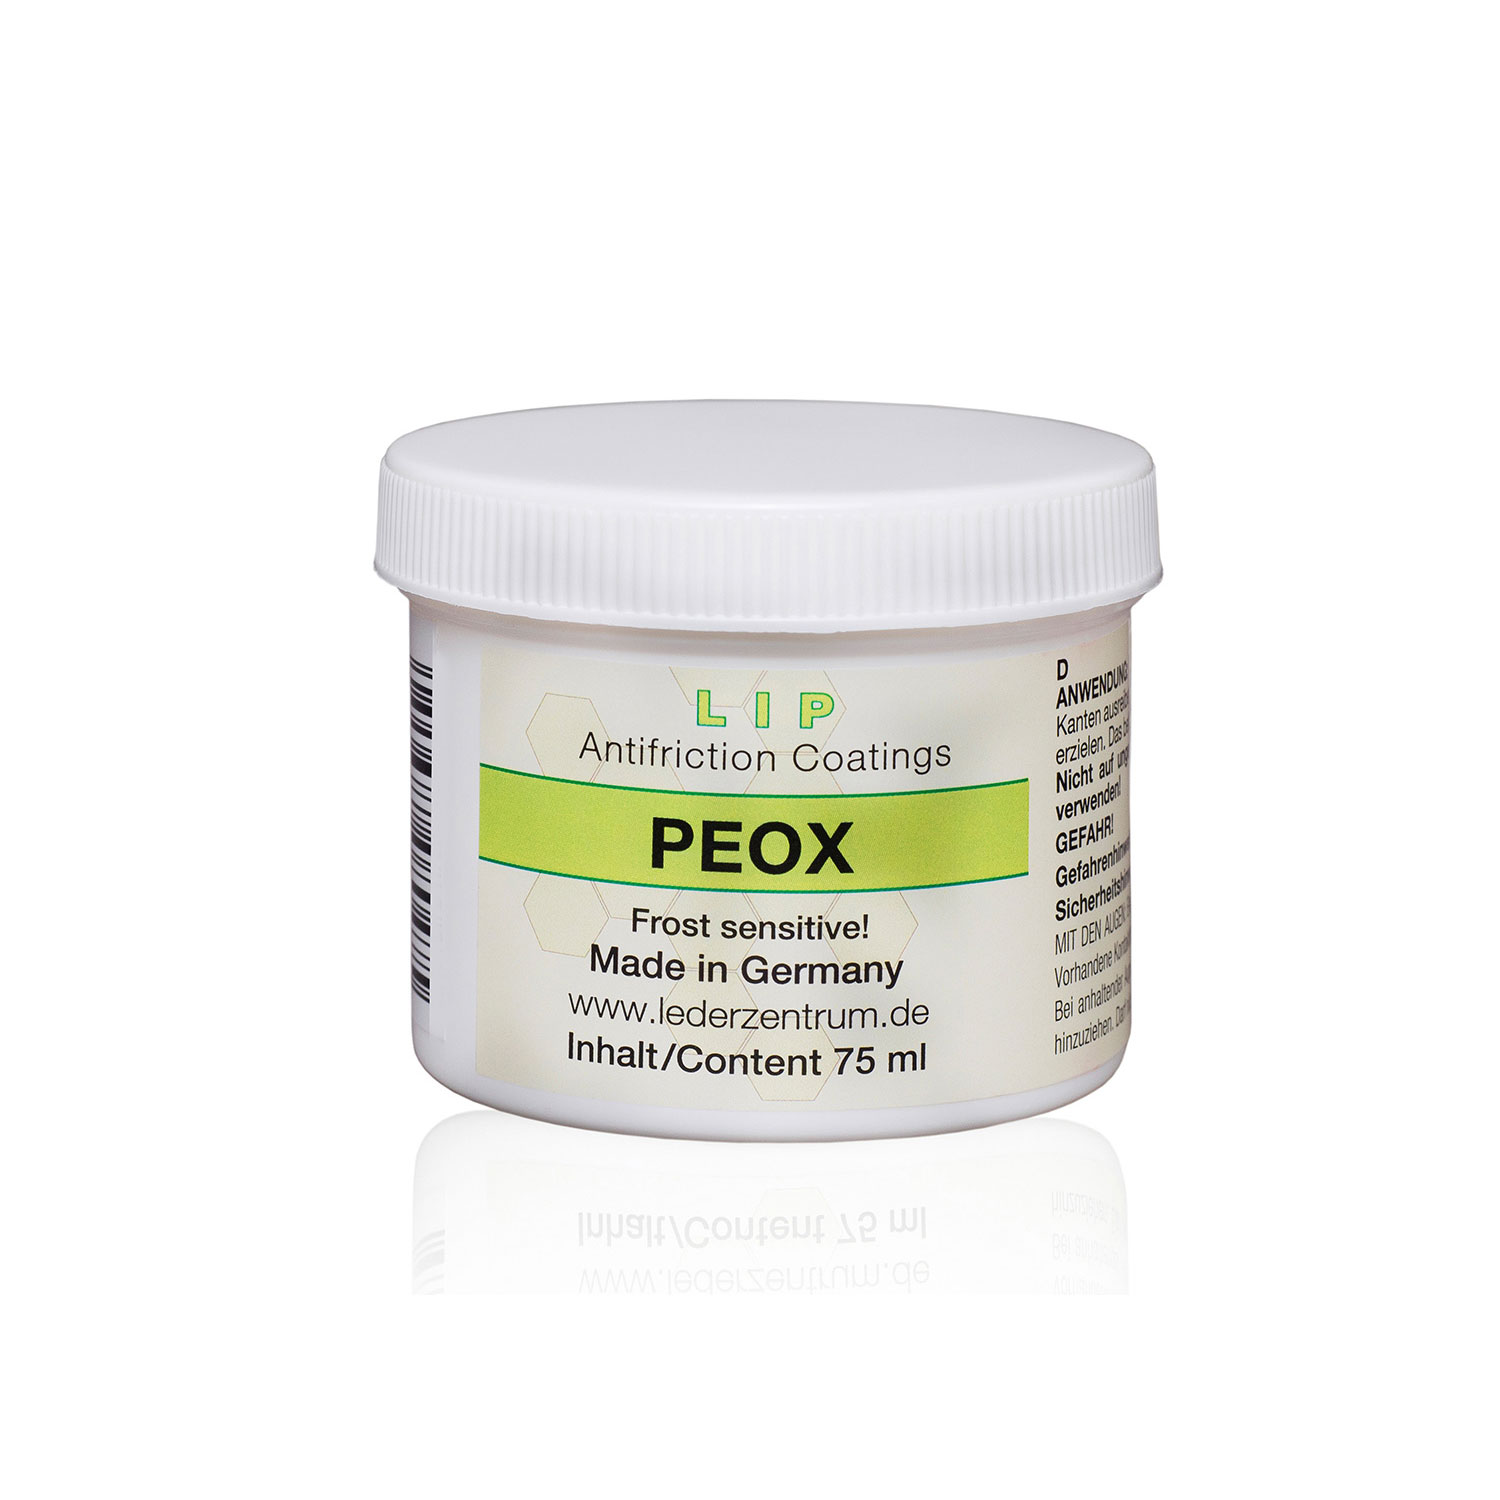 PEOX Antifriction Coating